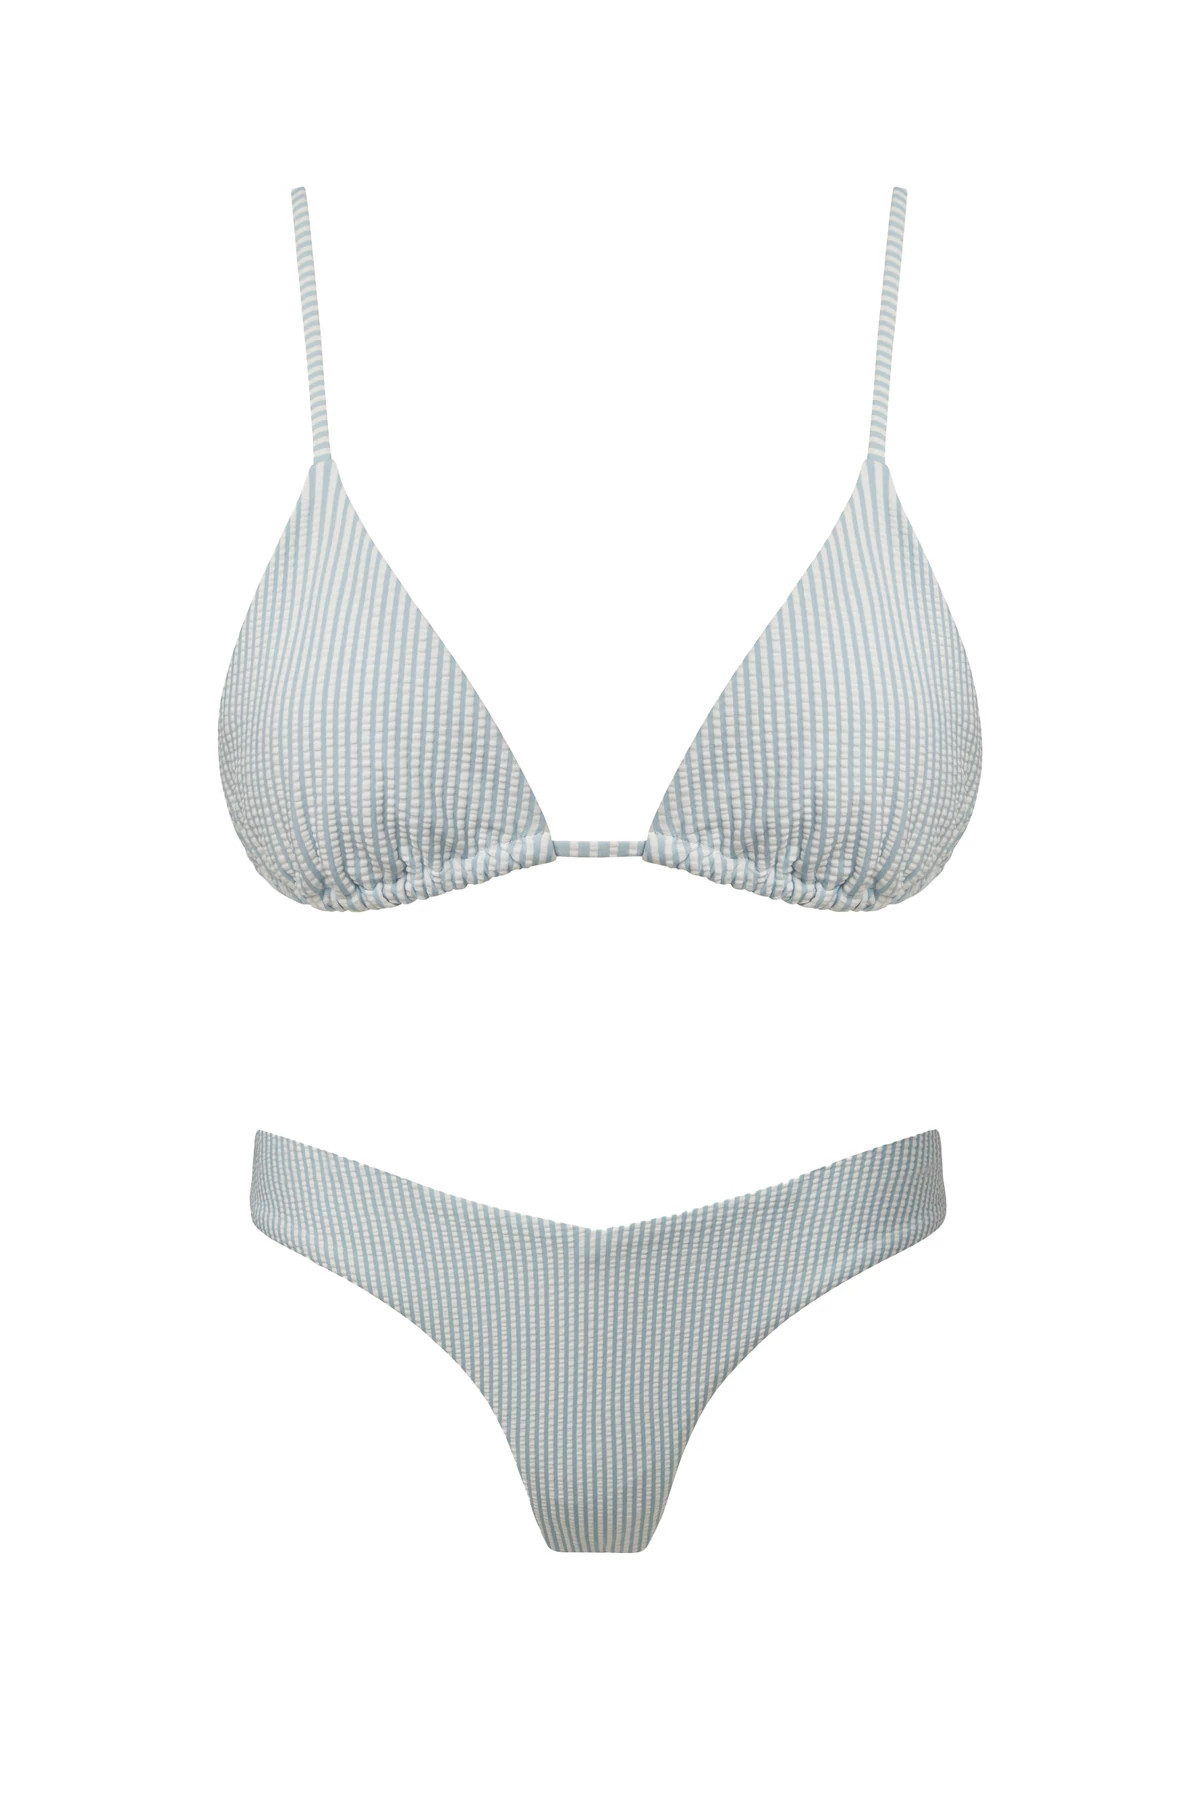 PALE BLUE/ WHITE Alexa Sliding Triangle Bikini Top image number 3